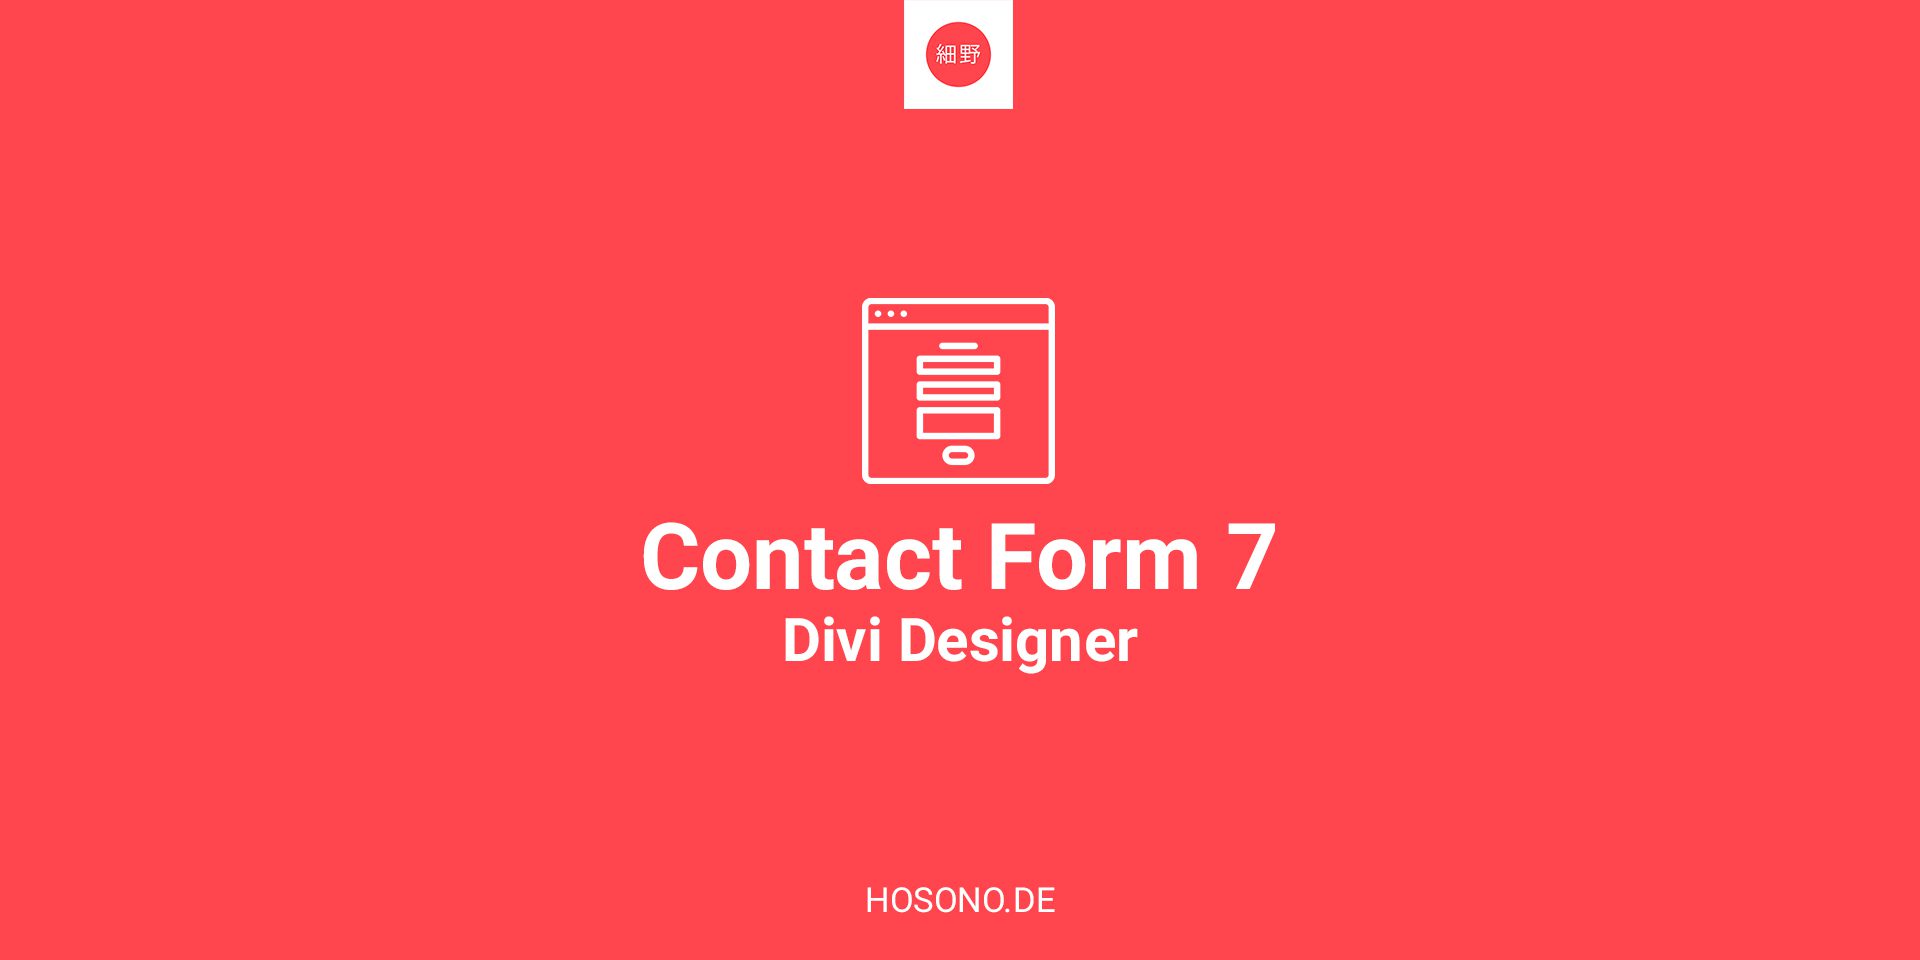 Contact Form 7 Formulare in Divi designen